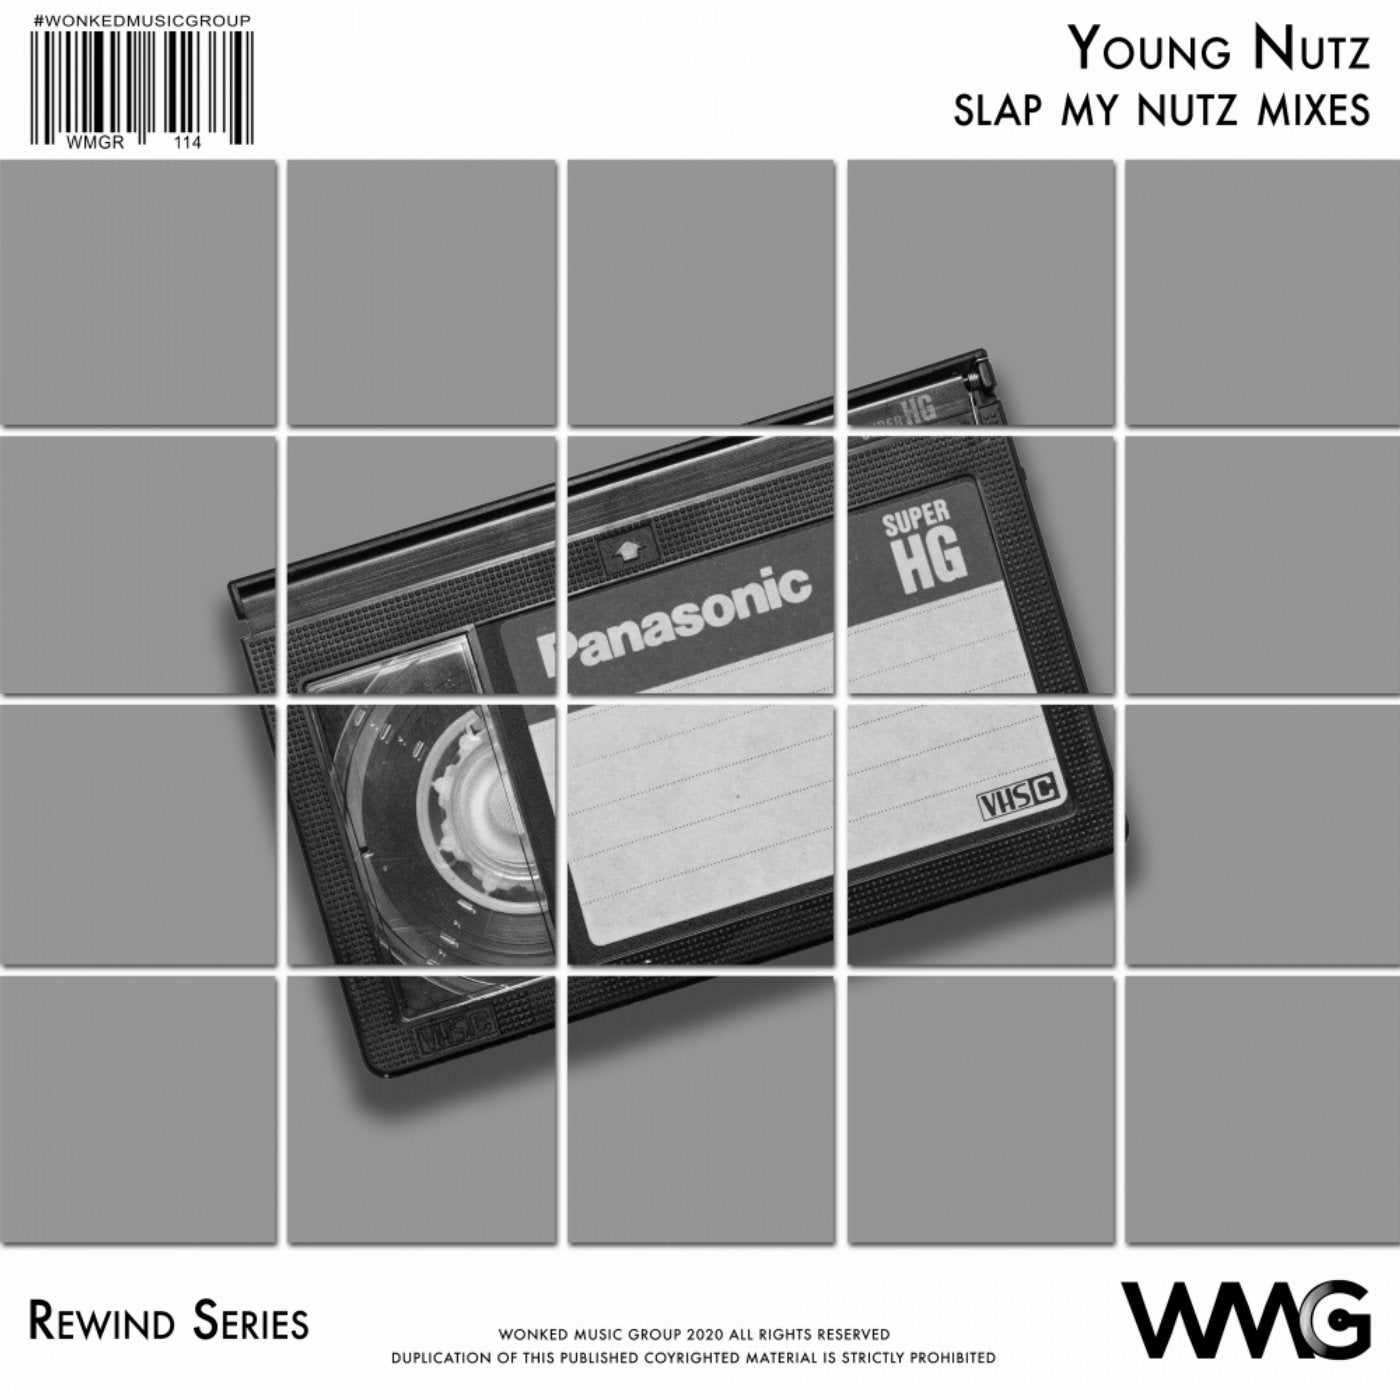 Rewind Series: Young Nutz - Slap My Nutz Mixes